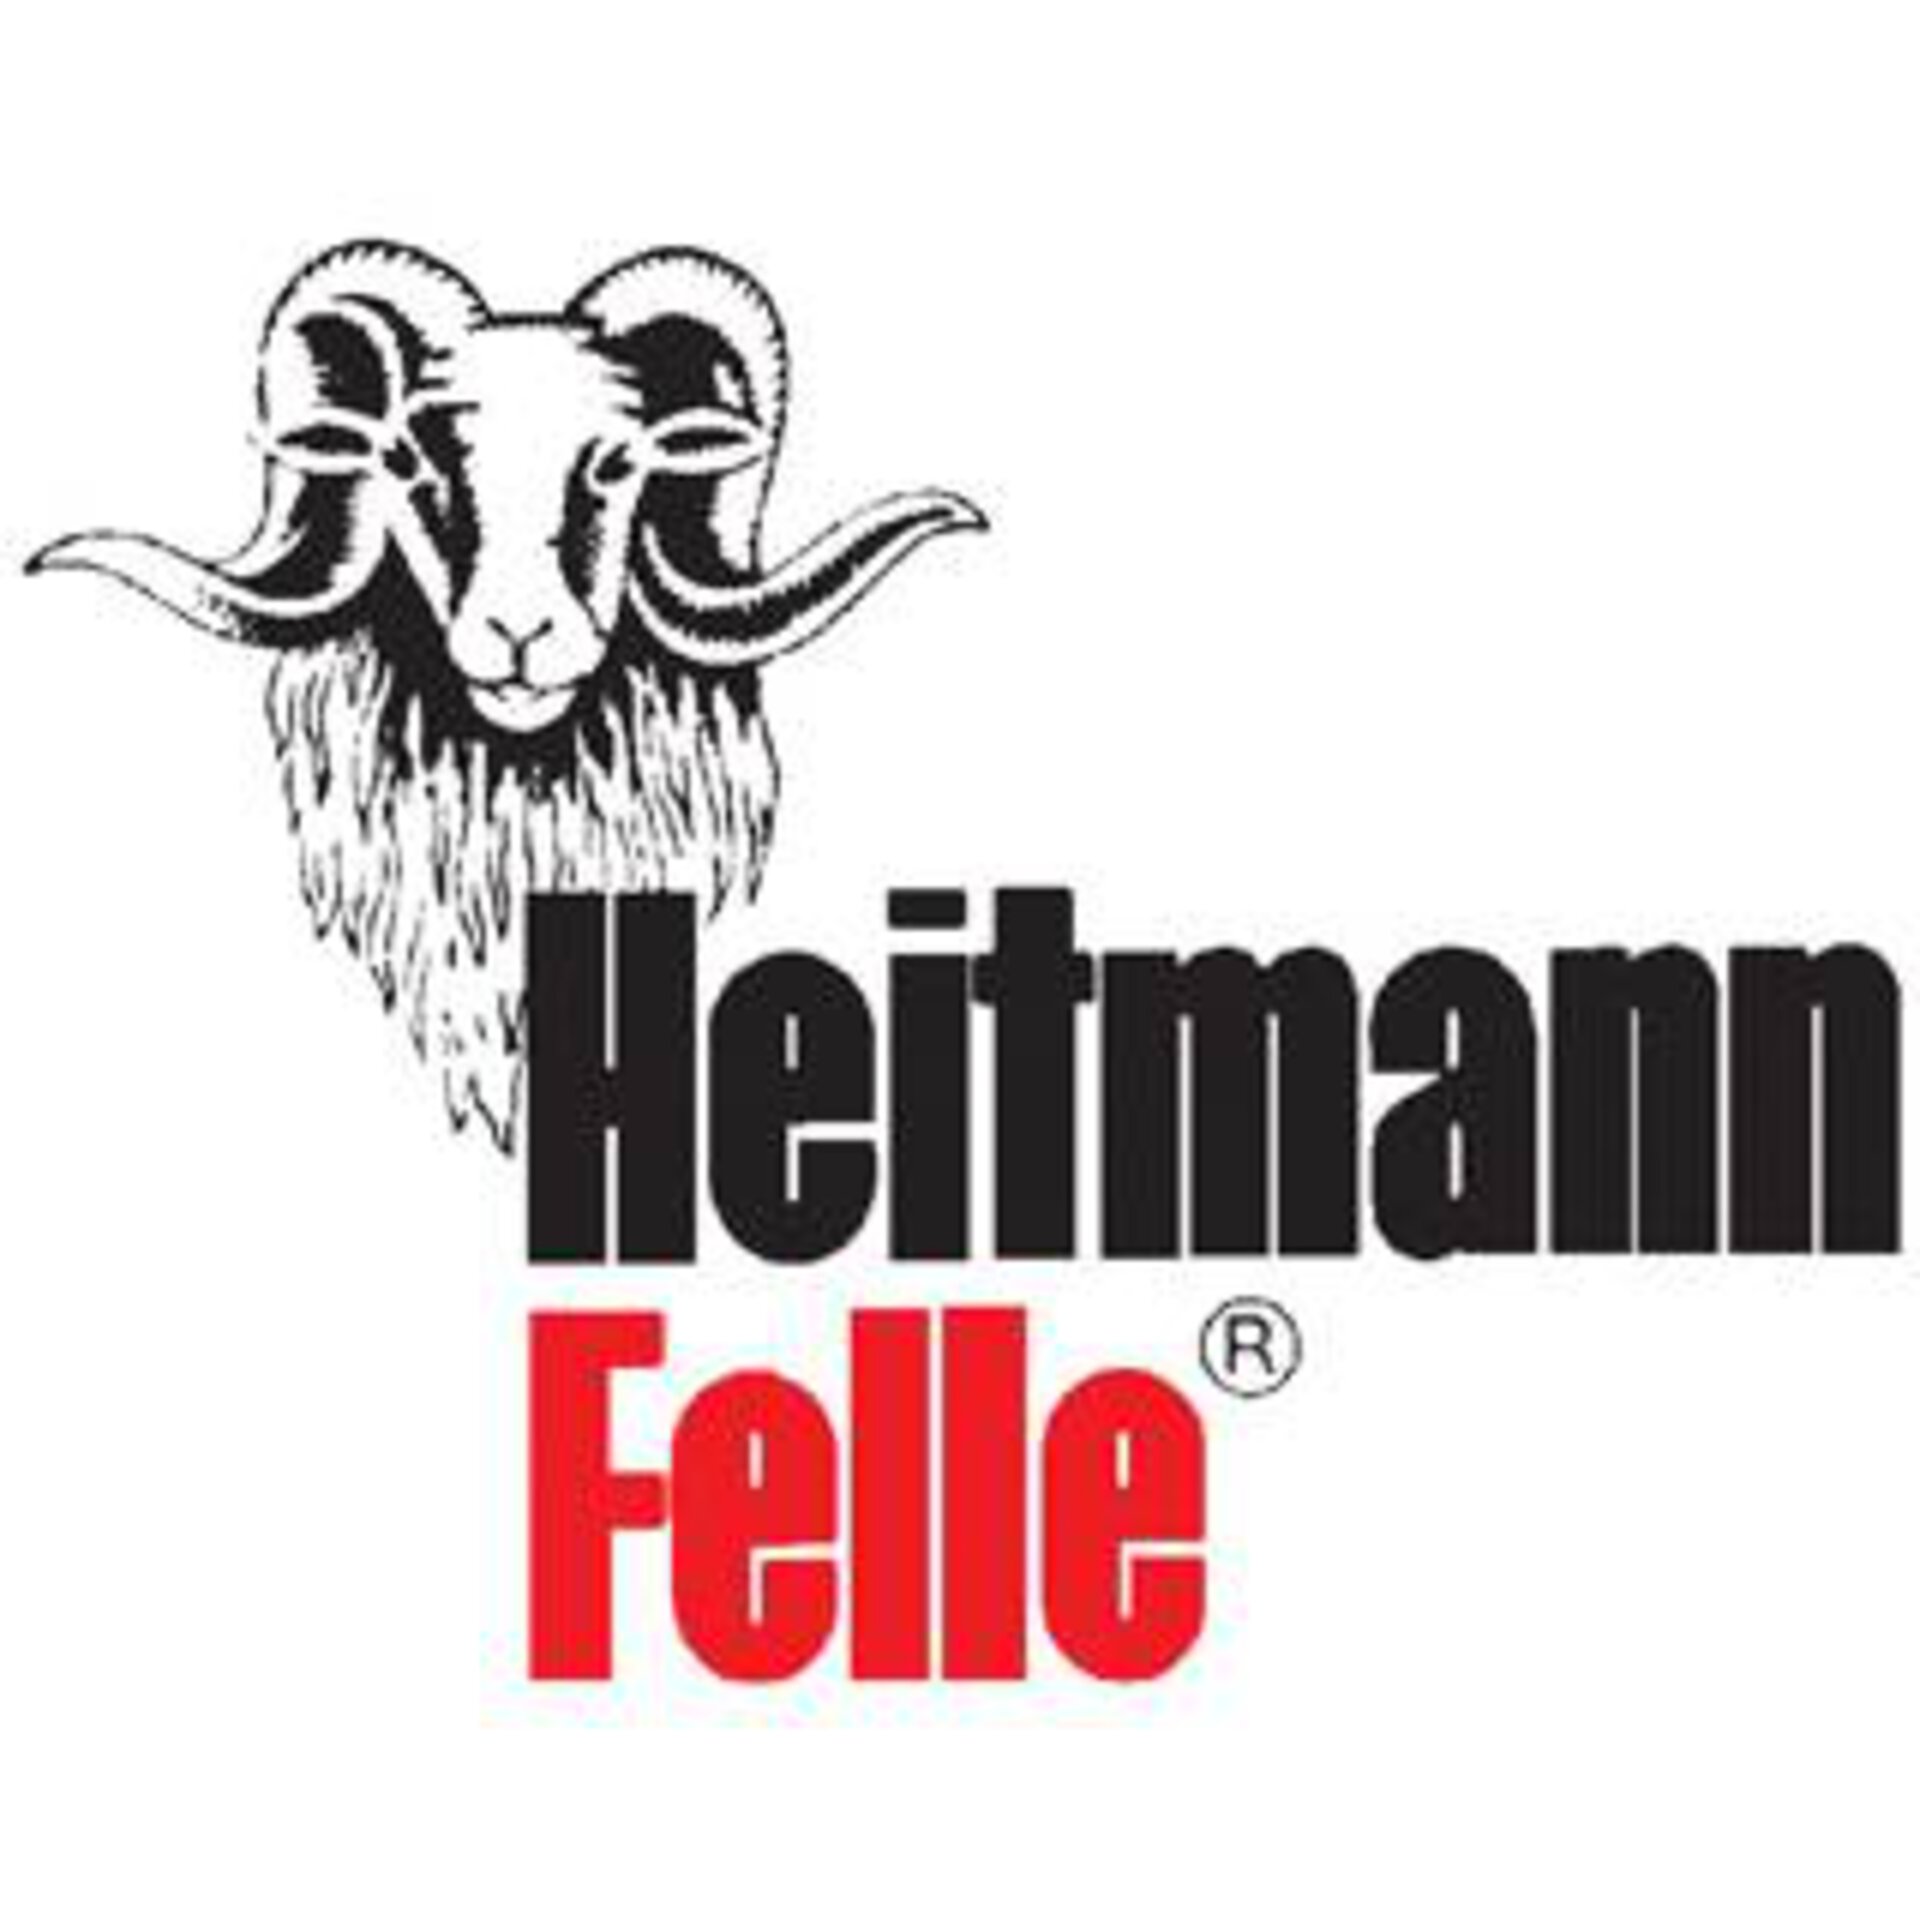 Logo Heitmann Felle